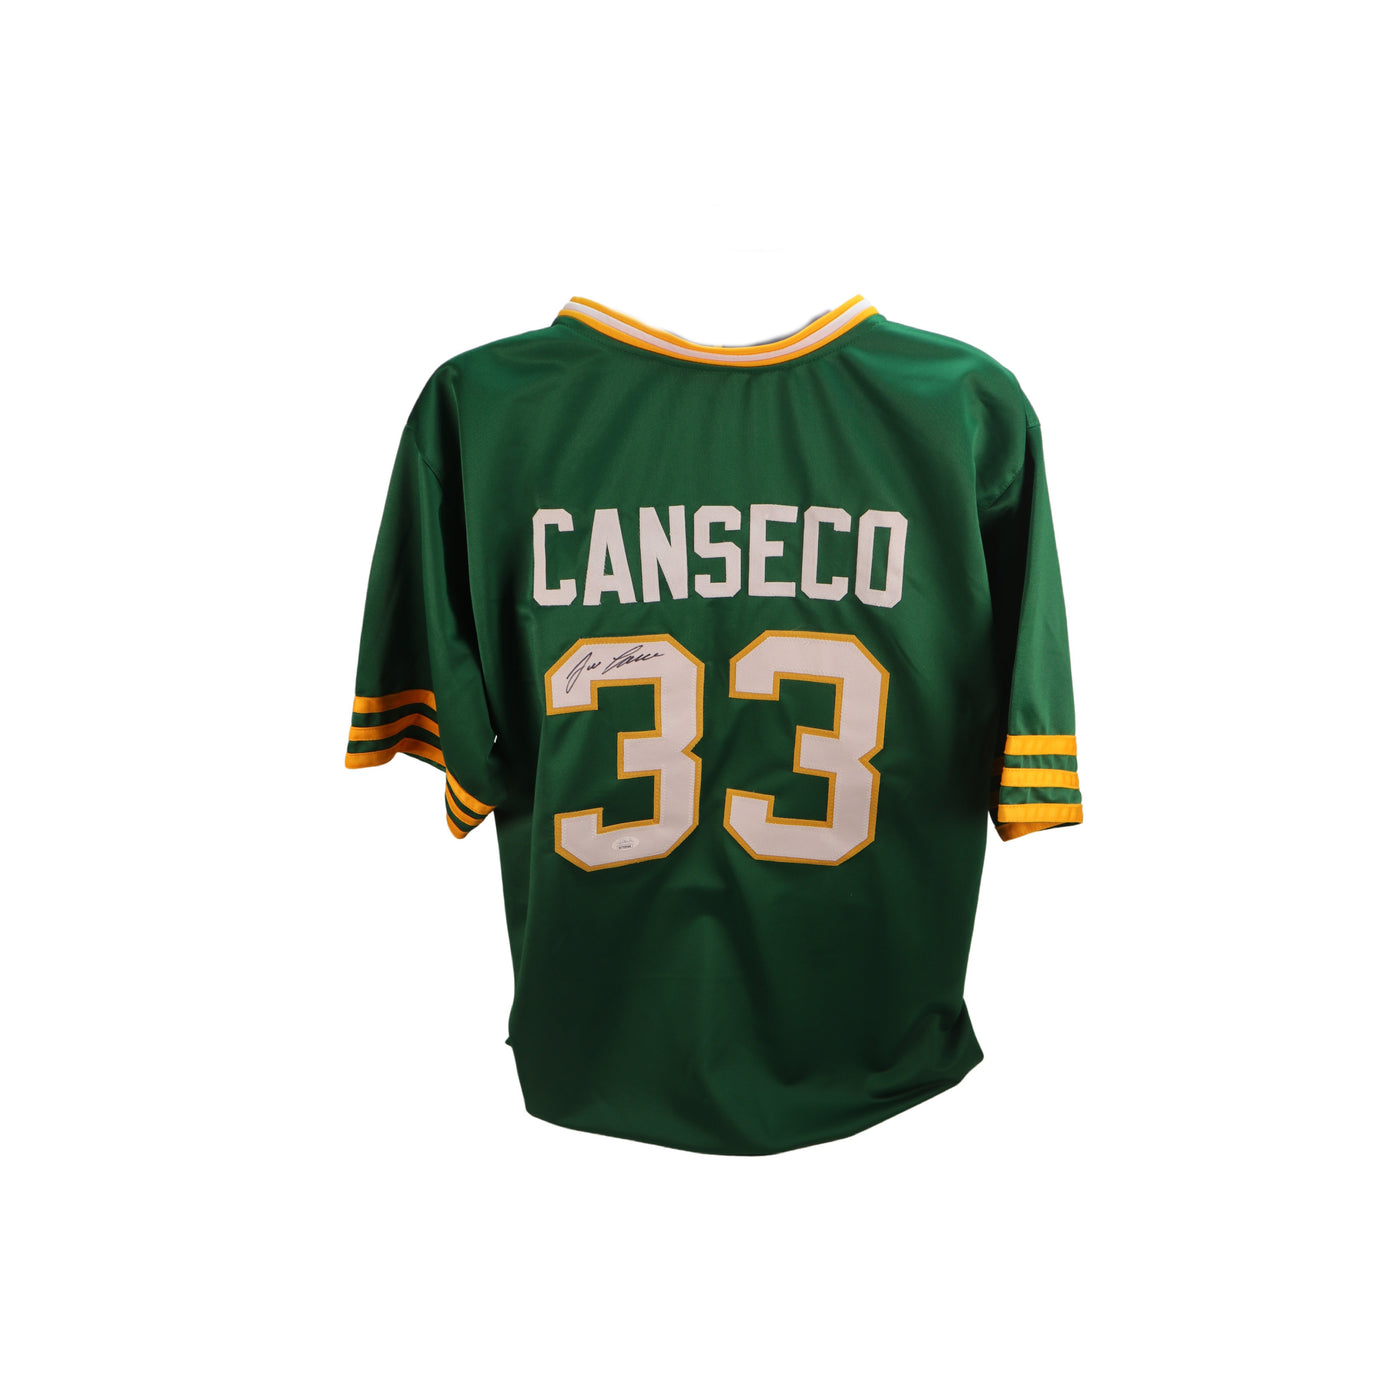 Autographed/Signed Jose Canseco Oakland Green Baseball Jersey JSA COA